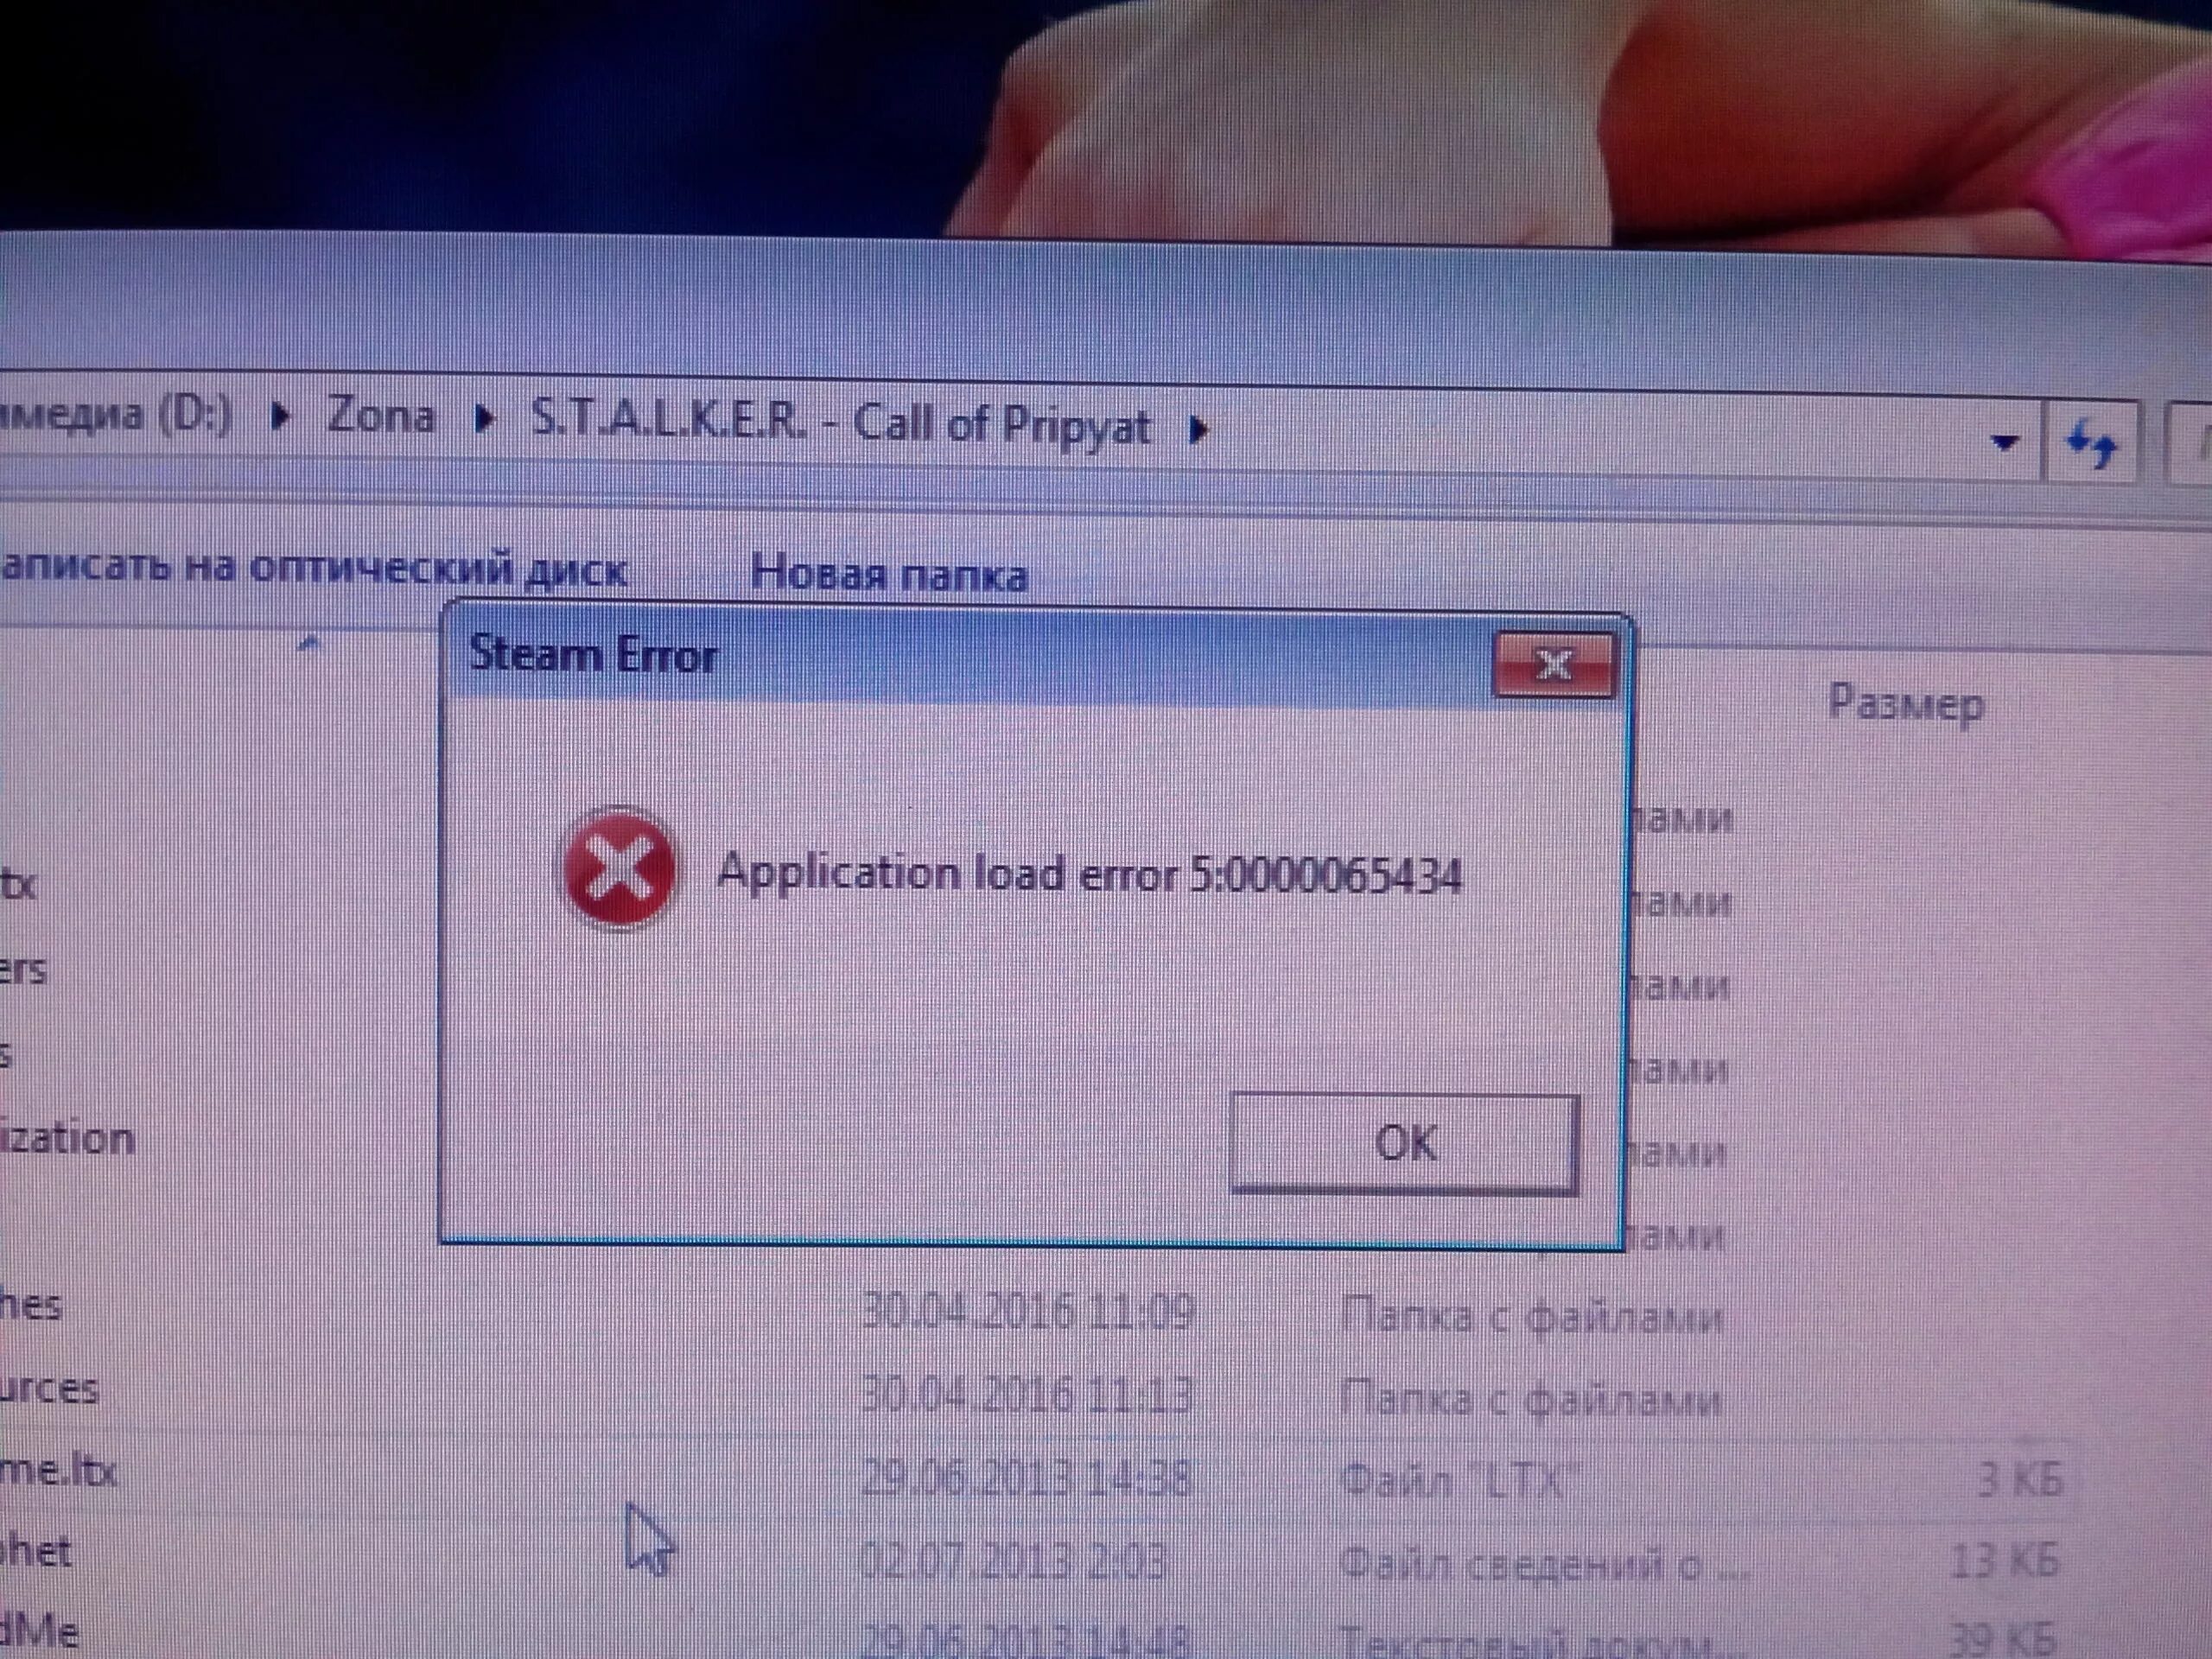 Application load error 0000065434. Ошибка application load Error 5 0000065434. Ошибка при запуске 5 0000065434. Ошибка Error.load settings. Errors load settings.